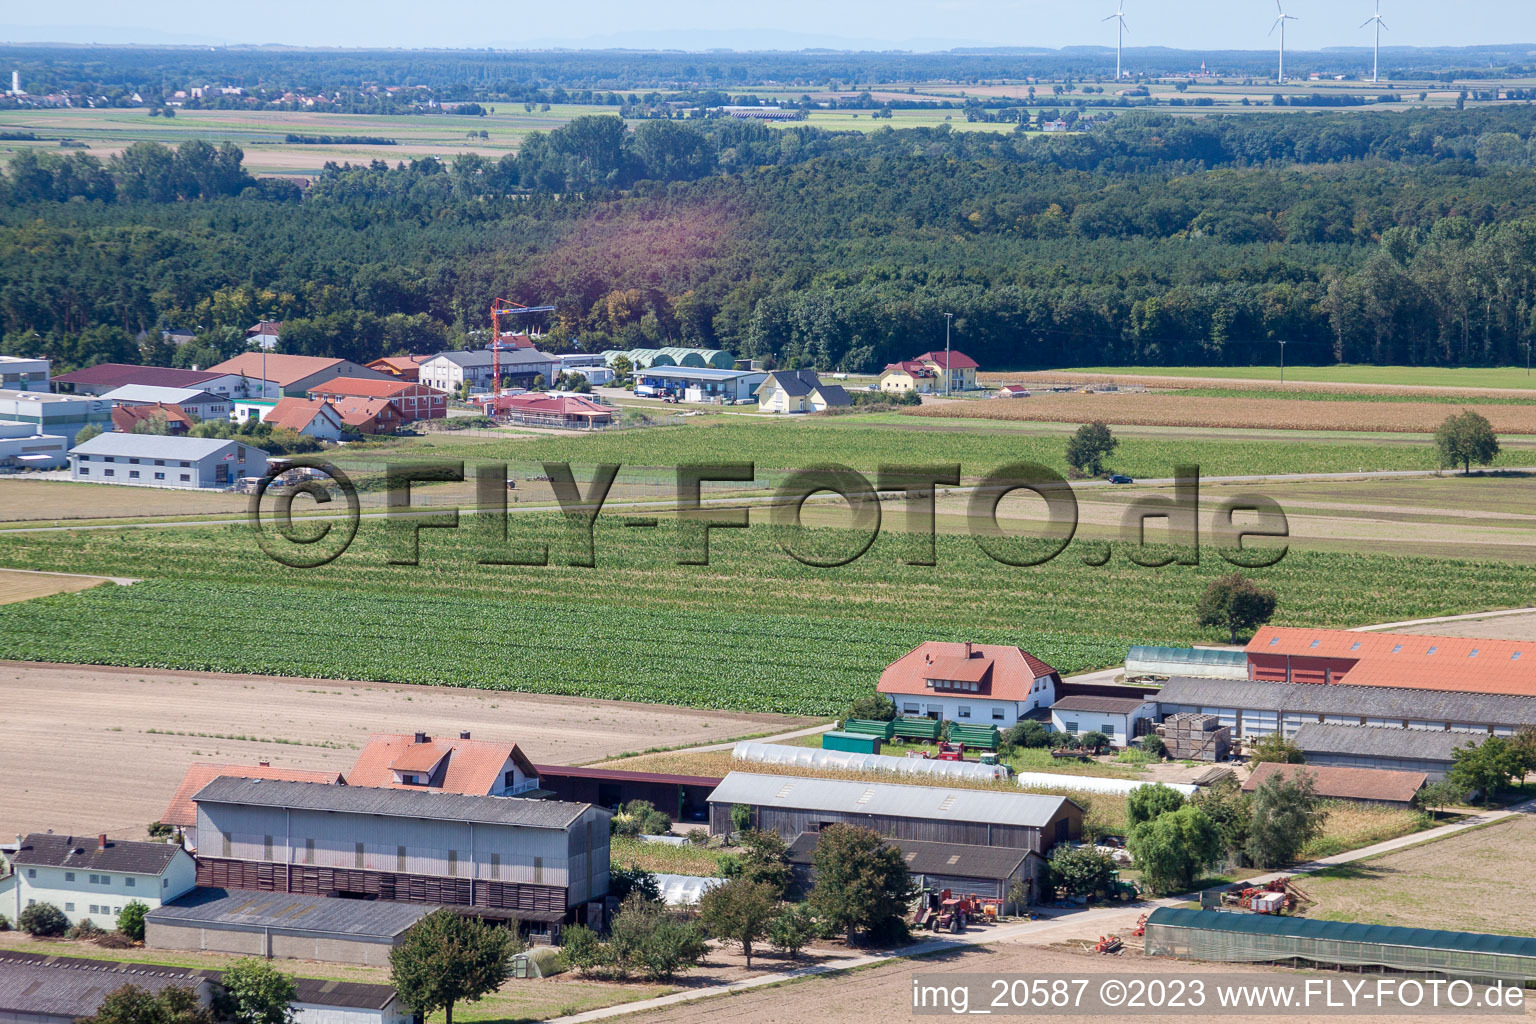 Drone recording of Hatzenbühl in the state Rhineland-Palatinate, Germany